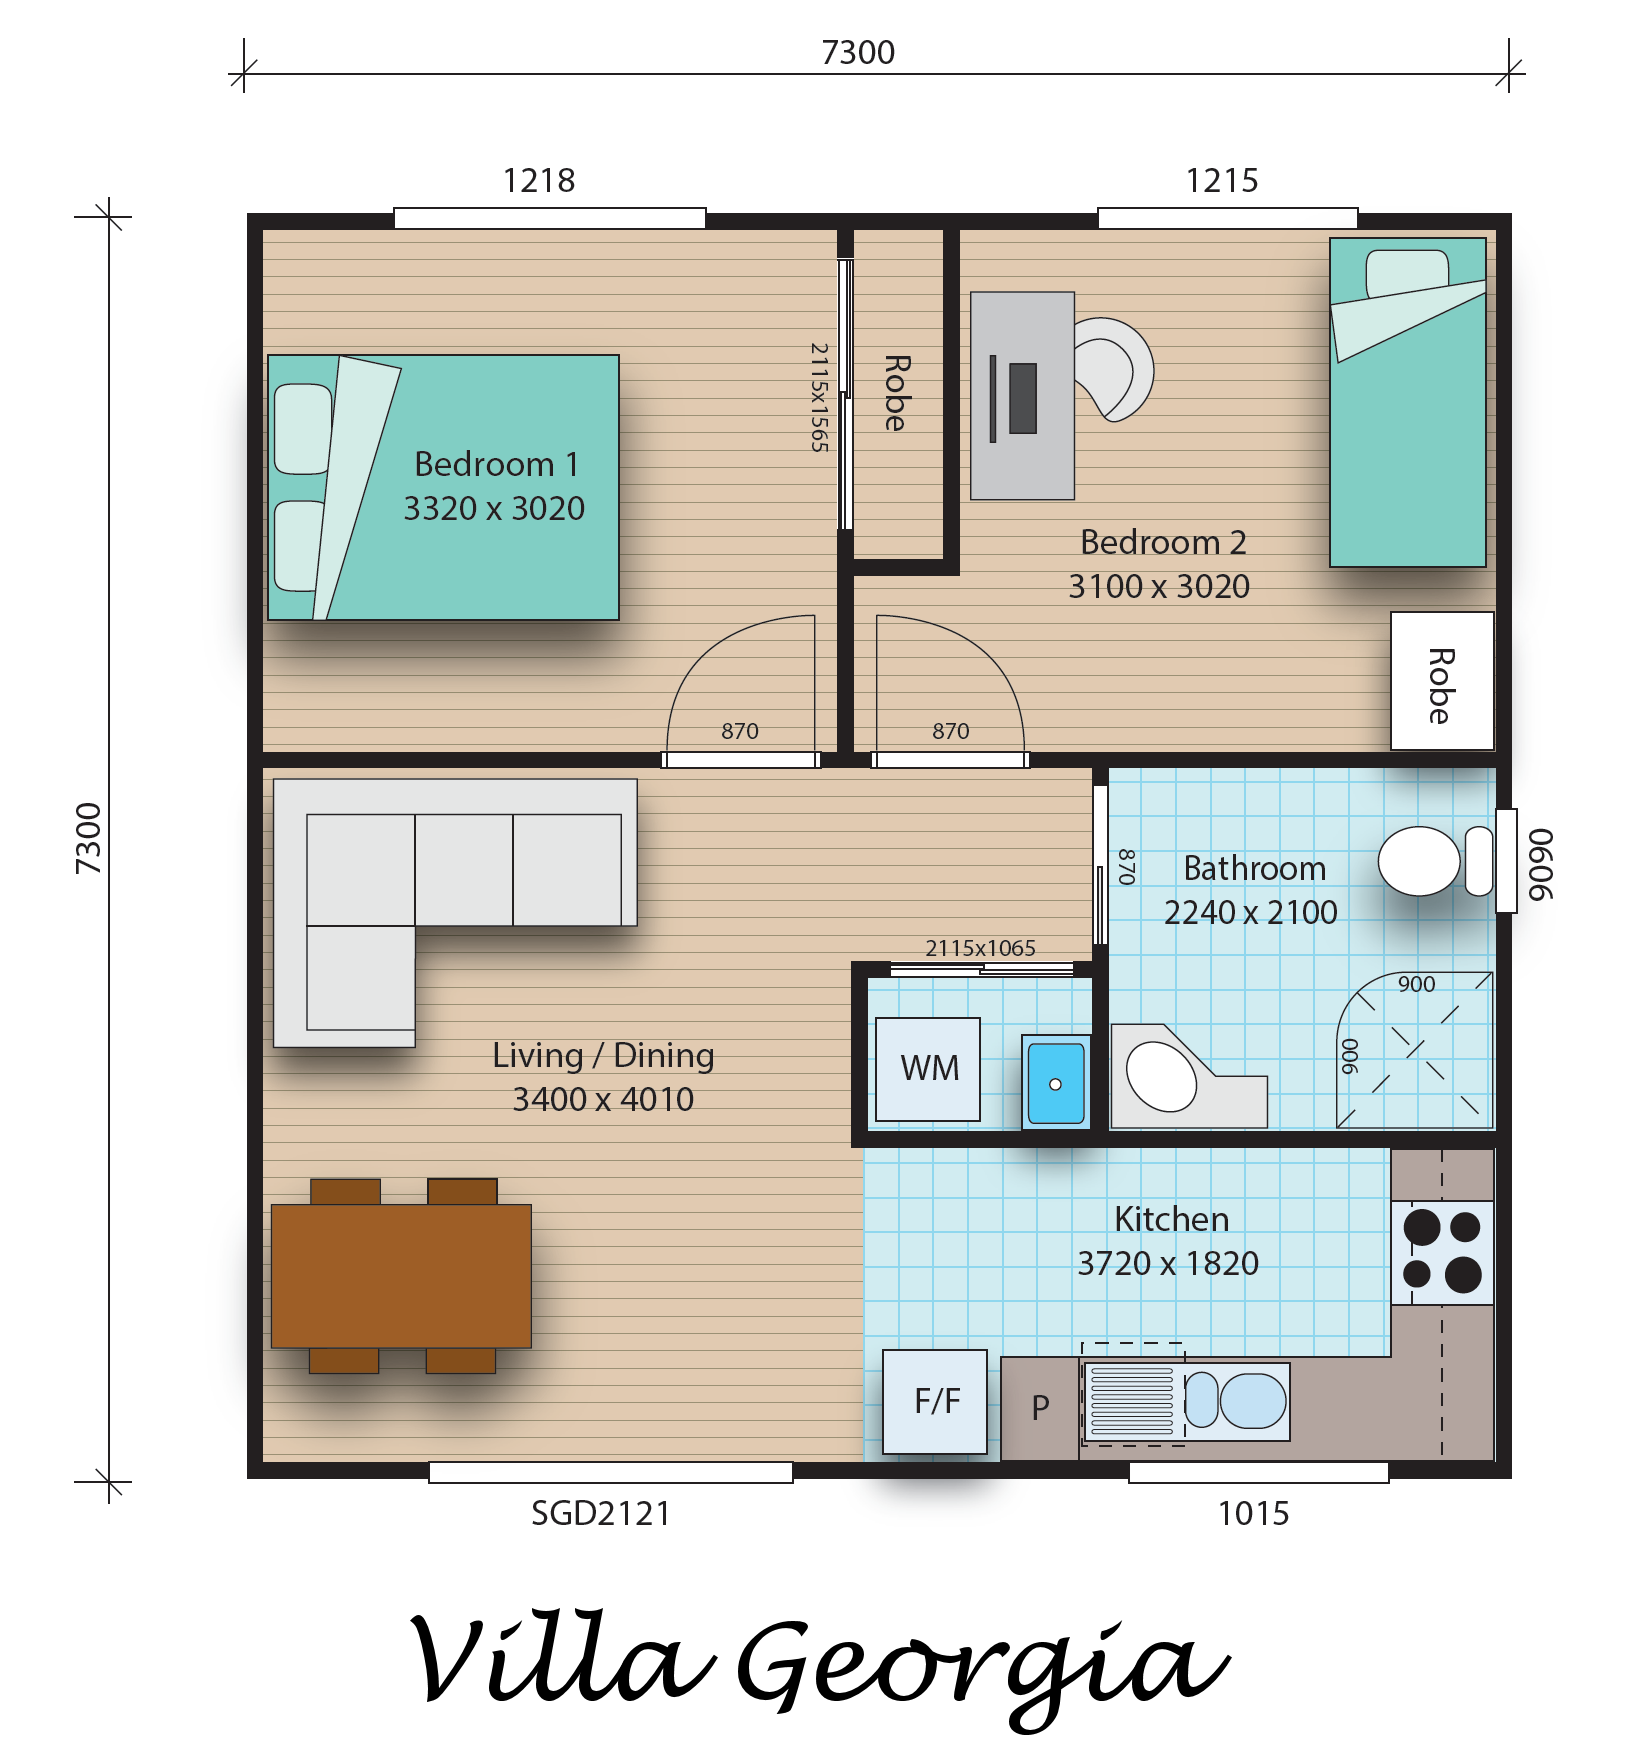 Villa Georgia floorplan image